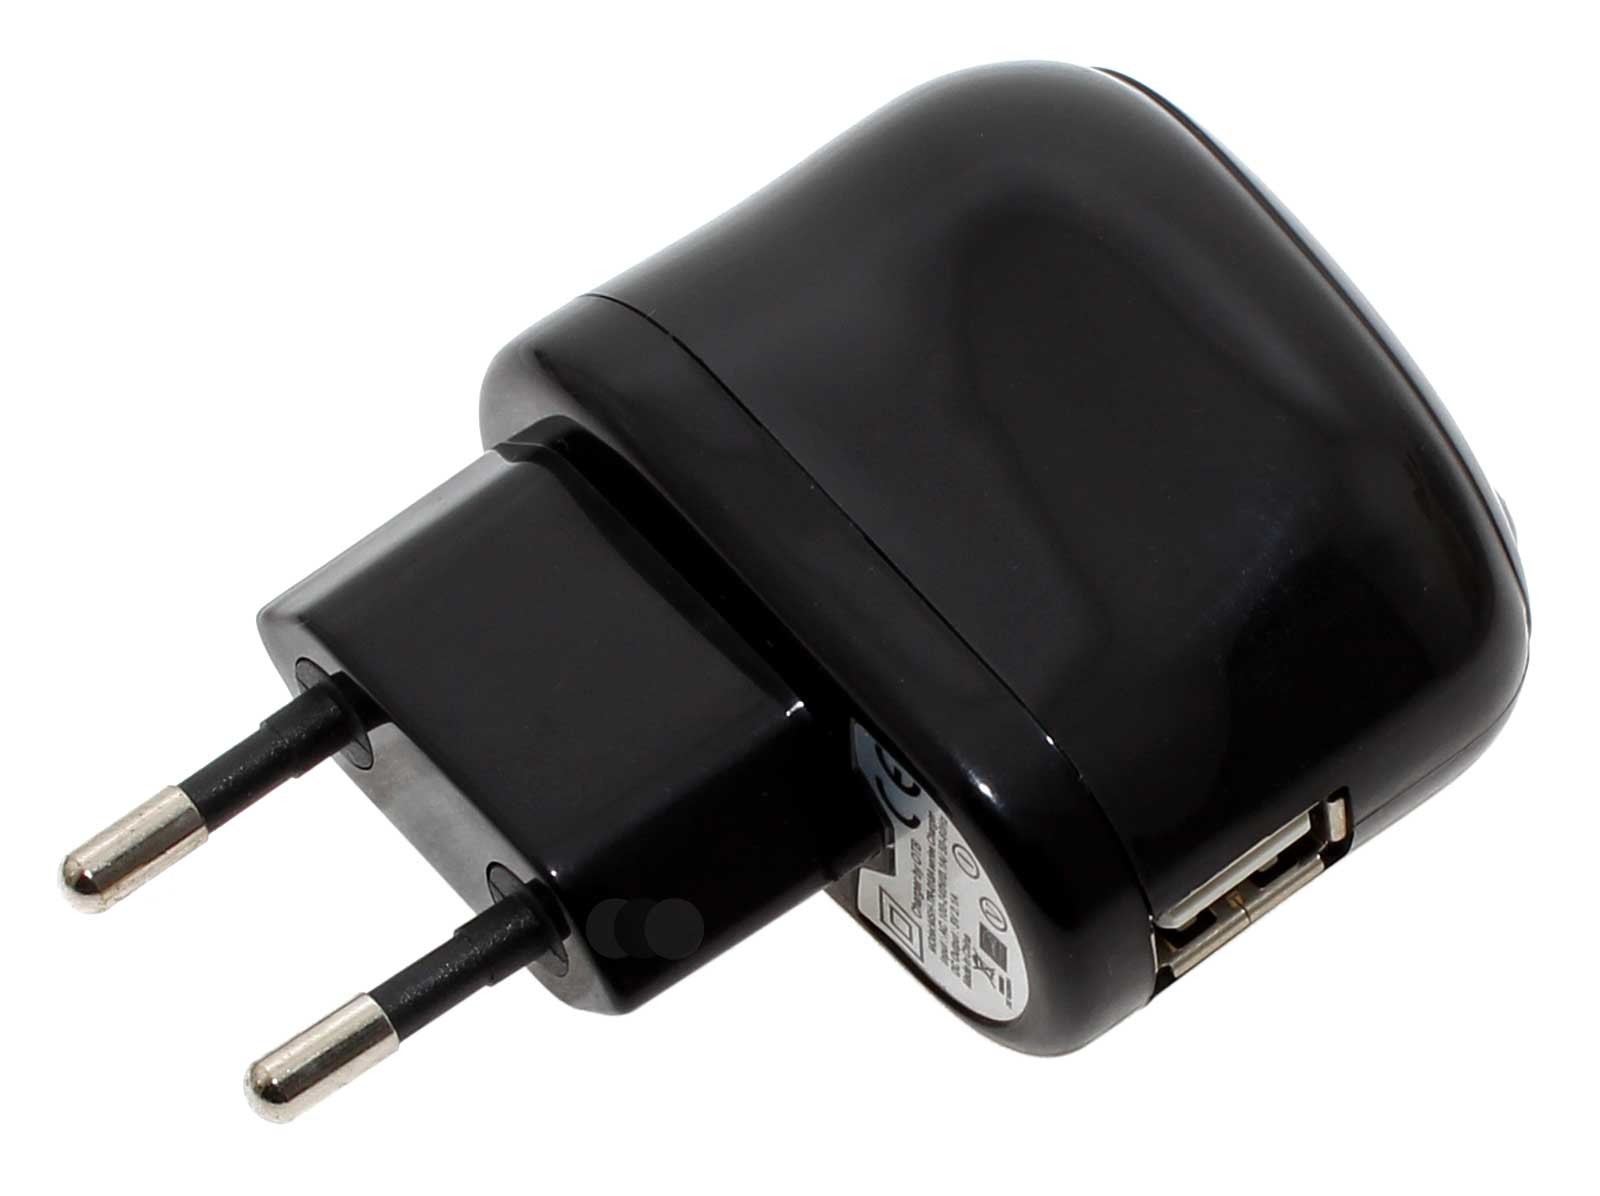 Ladeadapter Ladegerät Netzteil USB 2,1A z.B. für Apple iPad iPhone iPod, Navigationsgeräte wie TomTom, Garmin, PDA, oder Smartphone wie Samsung Galaxy Tab, Galaxy S4,  S5 in schwarz